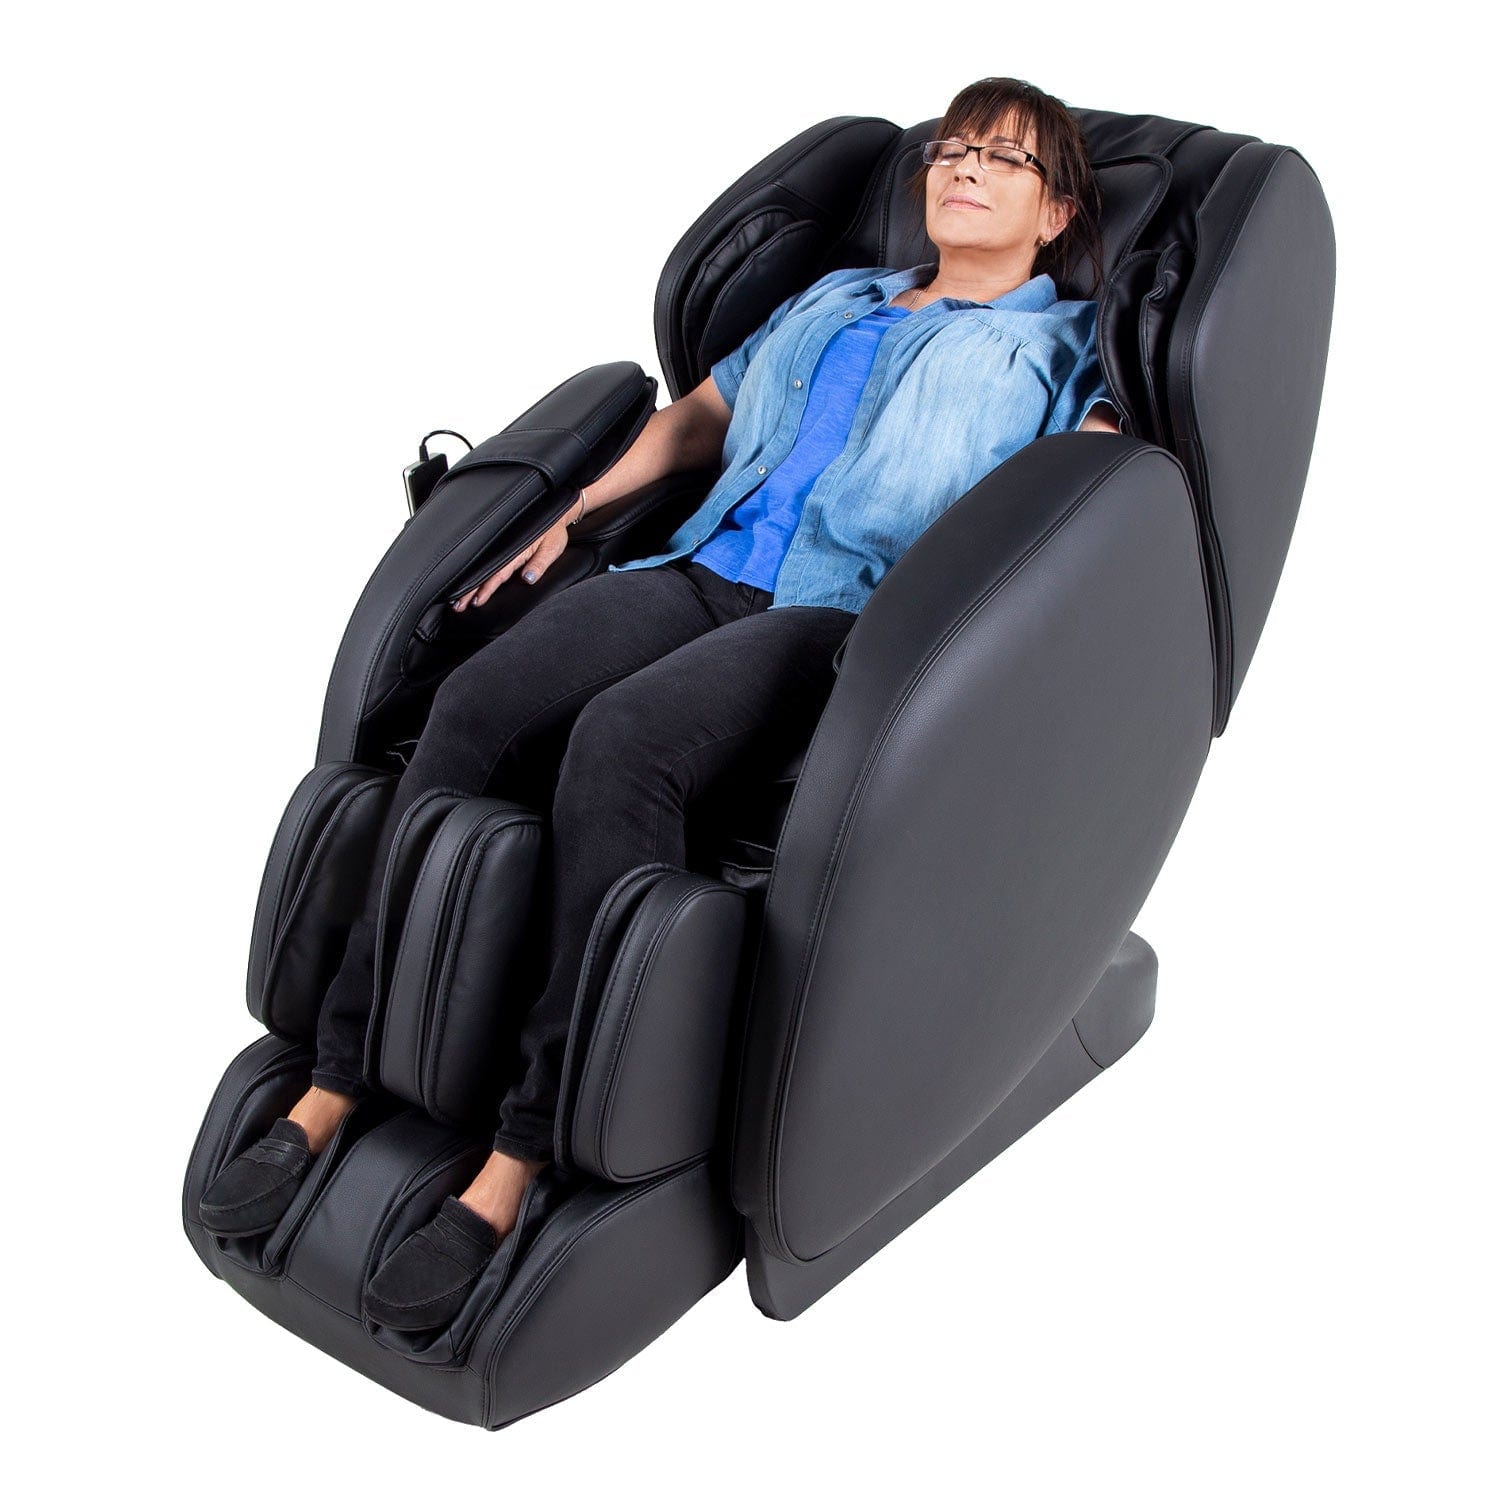 Trumedic InstaShiatsu+ Massage Chair MC-1500